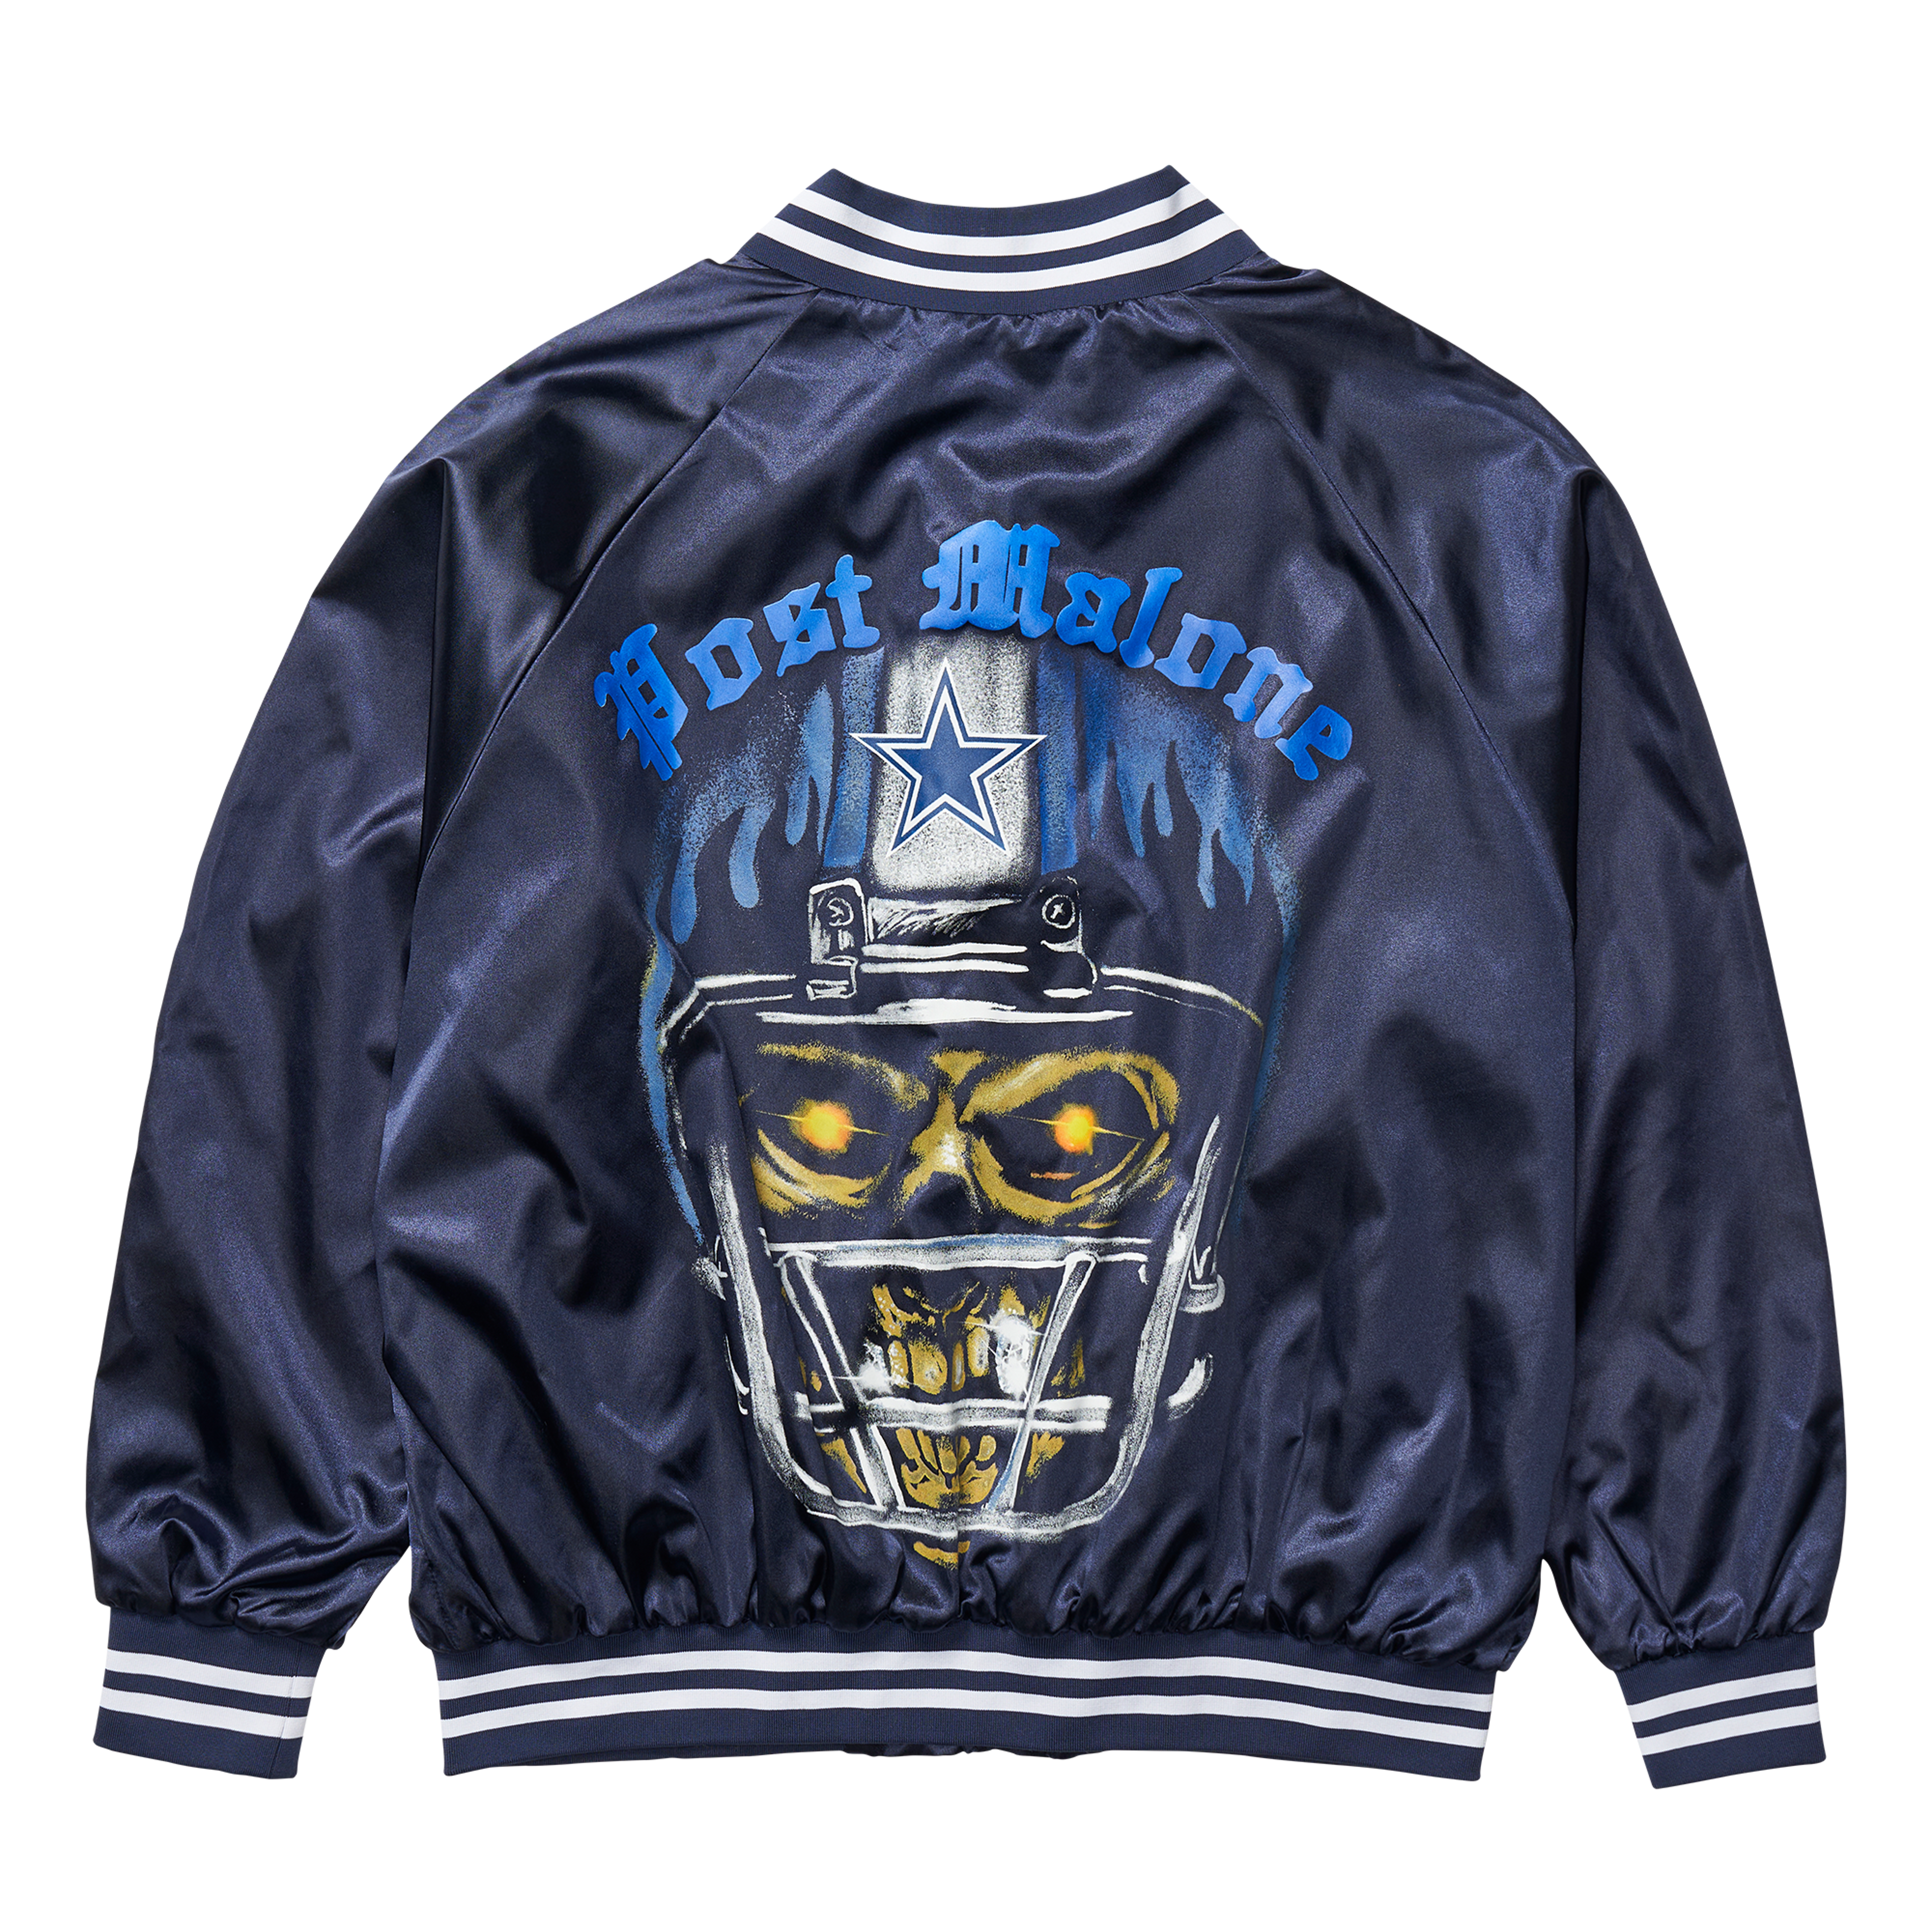 Post Malone + Dallas Cowboys Skeleton Starter Jacket